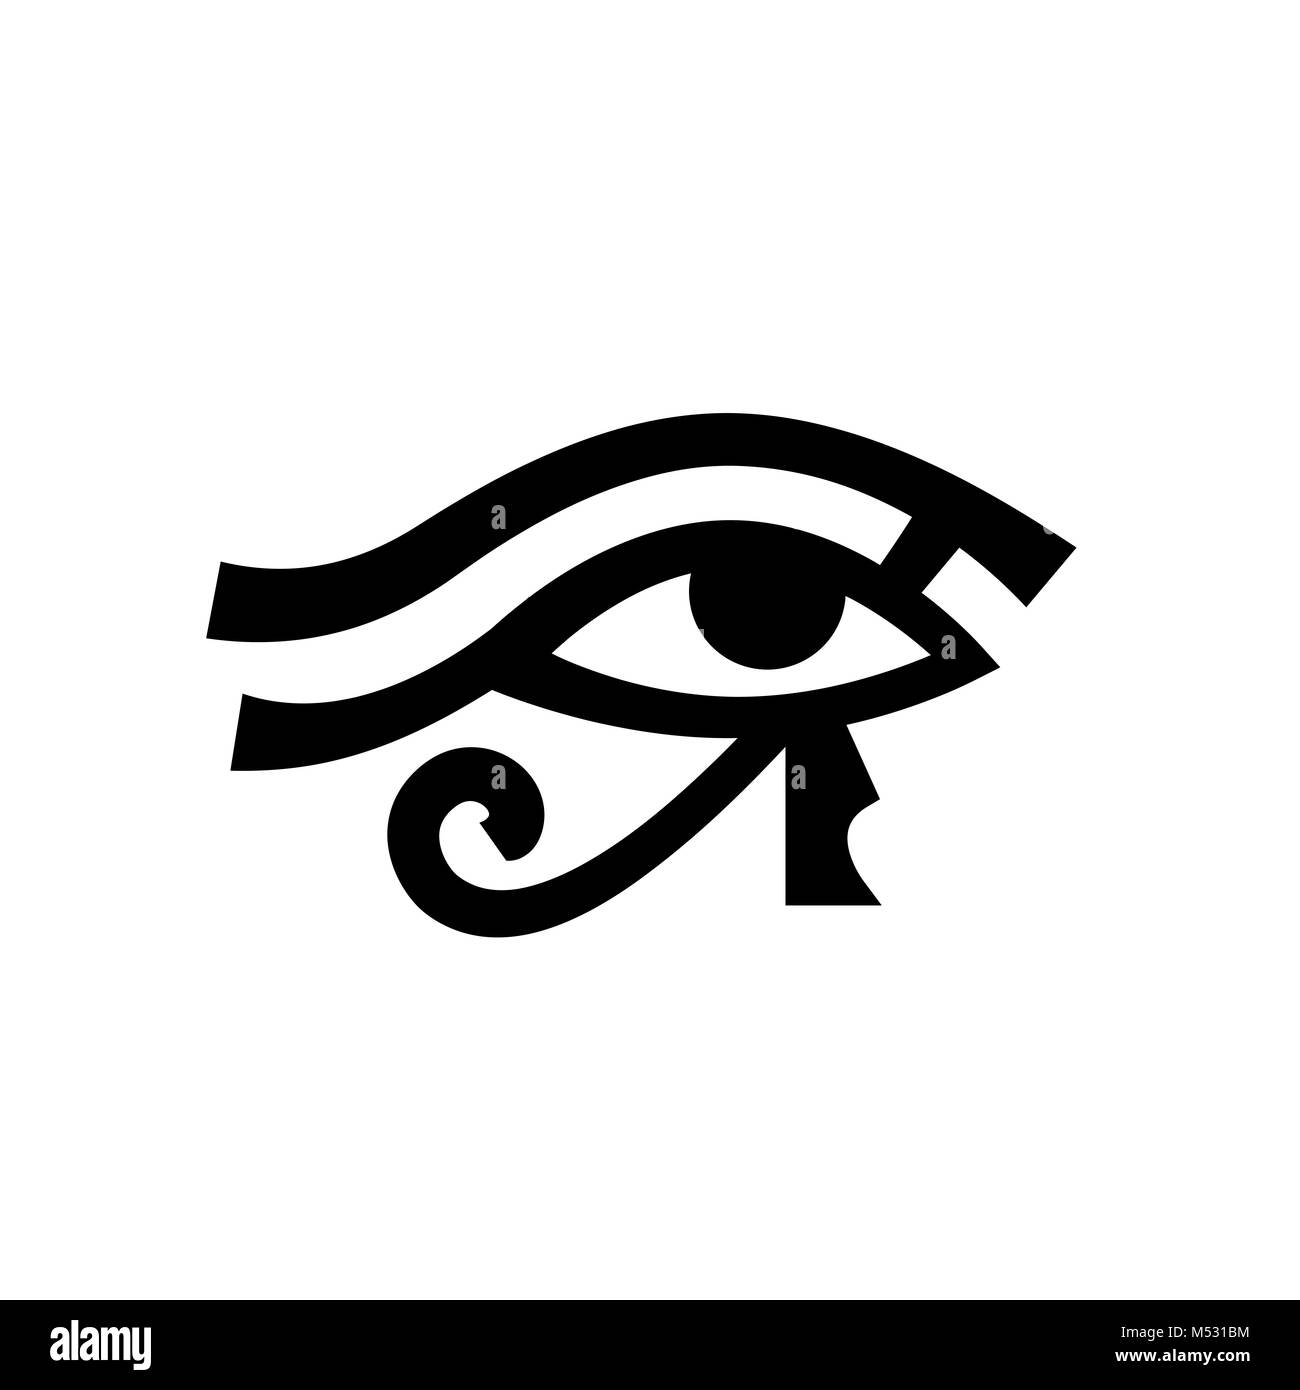 Stéfano Alcántara  Eye of Horus while many have tried to copy it